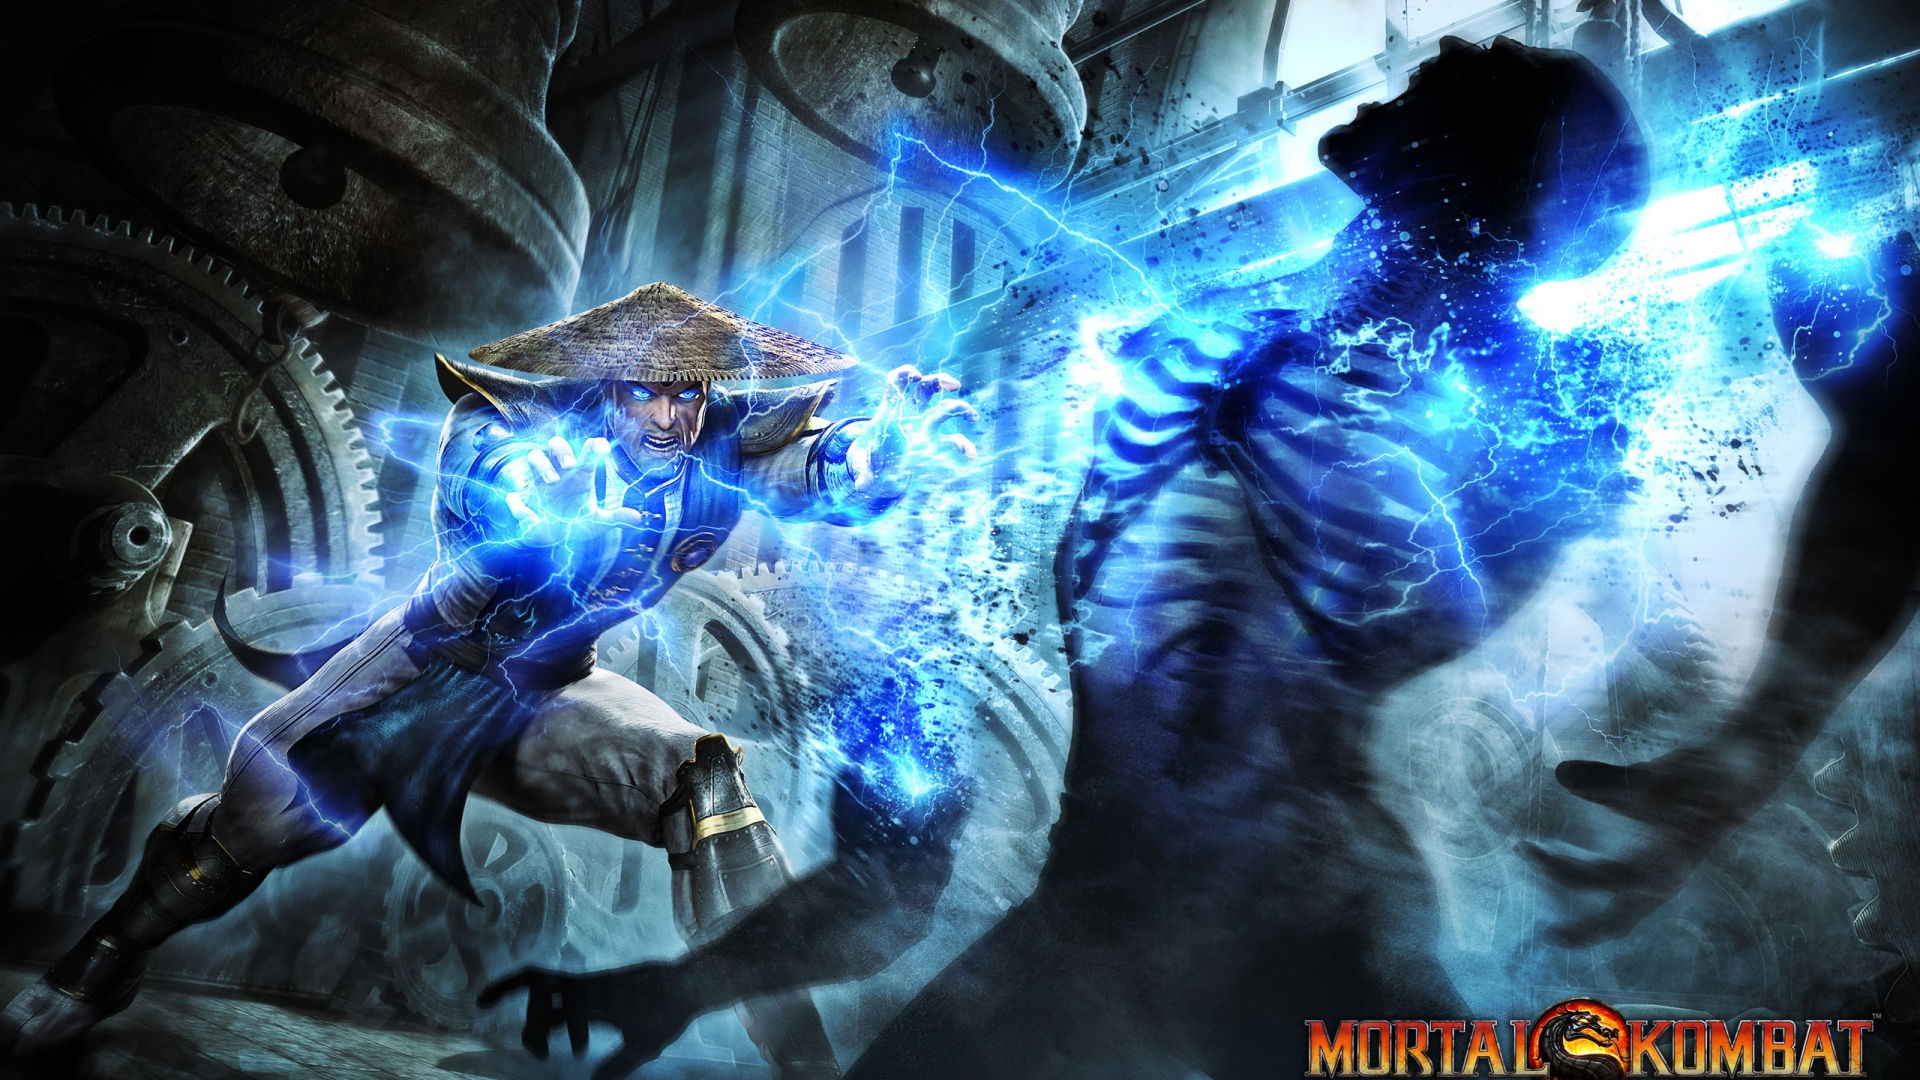 Mortal Kombat Raiden for 1920 x 1080 HDTV 1080p resolution